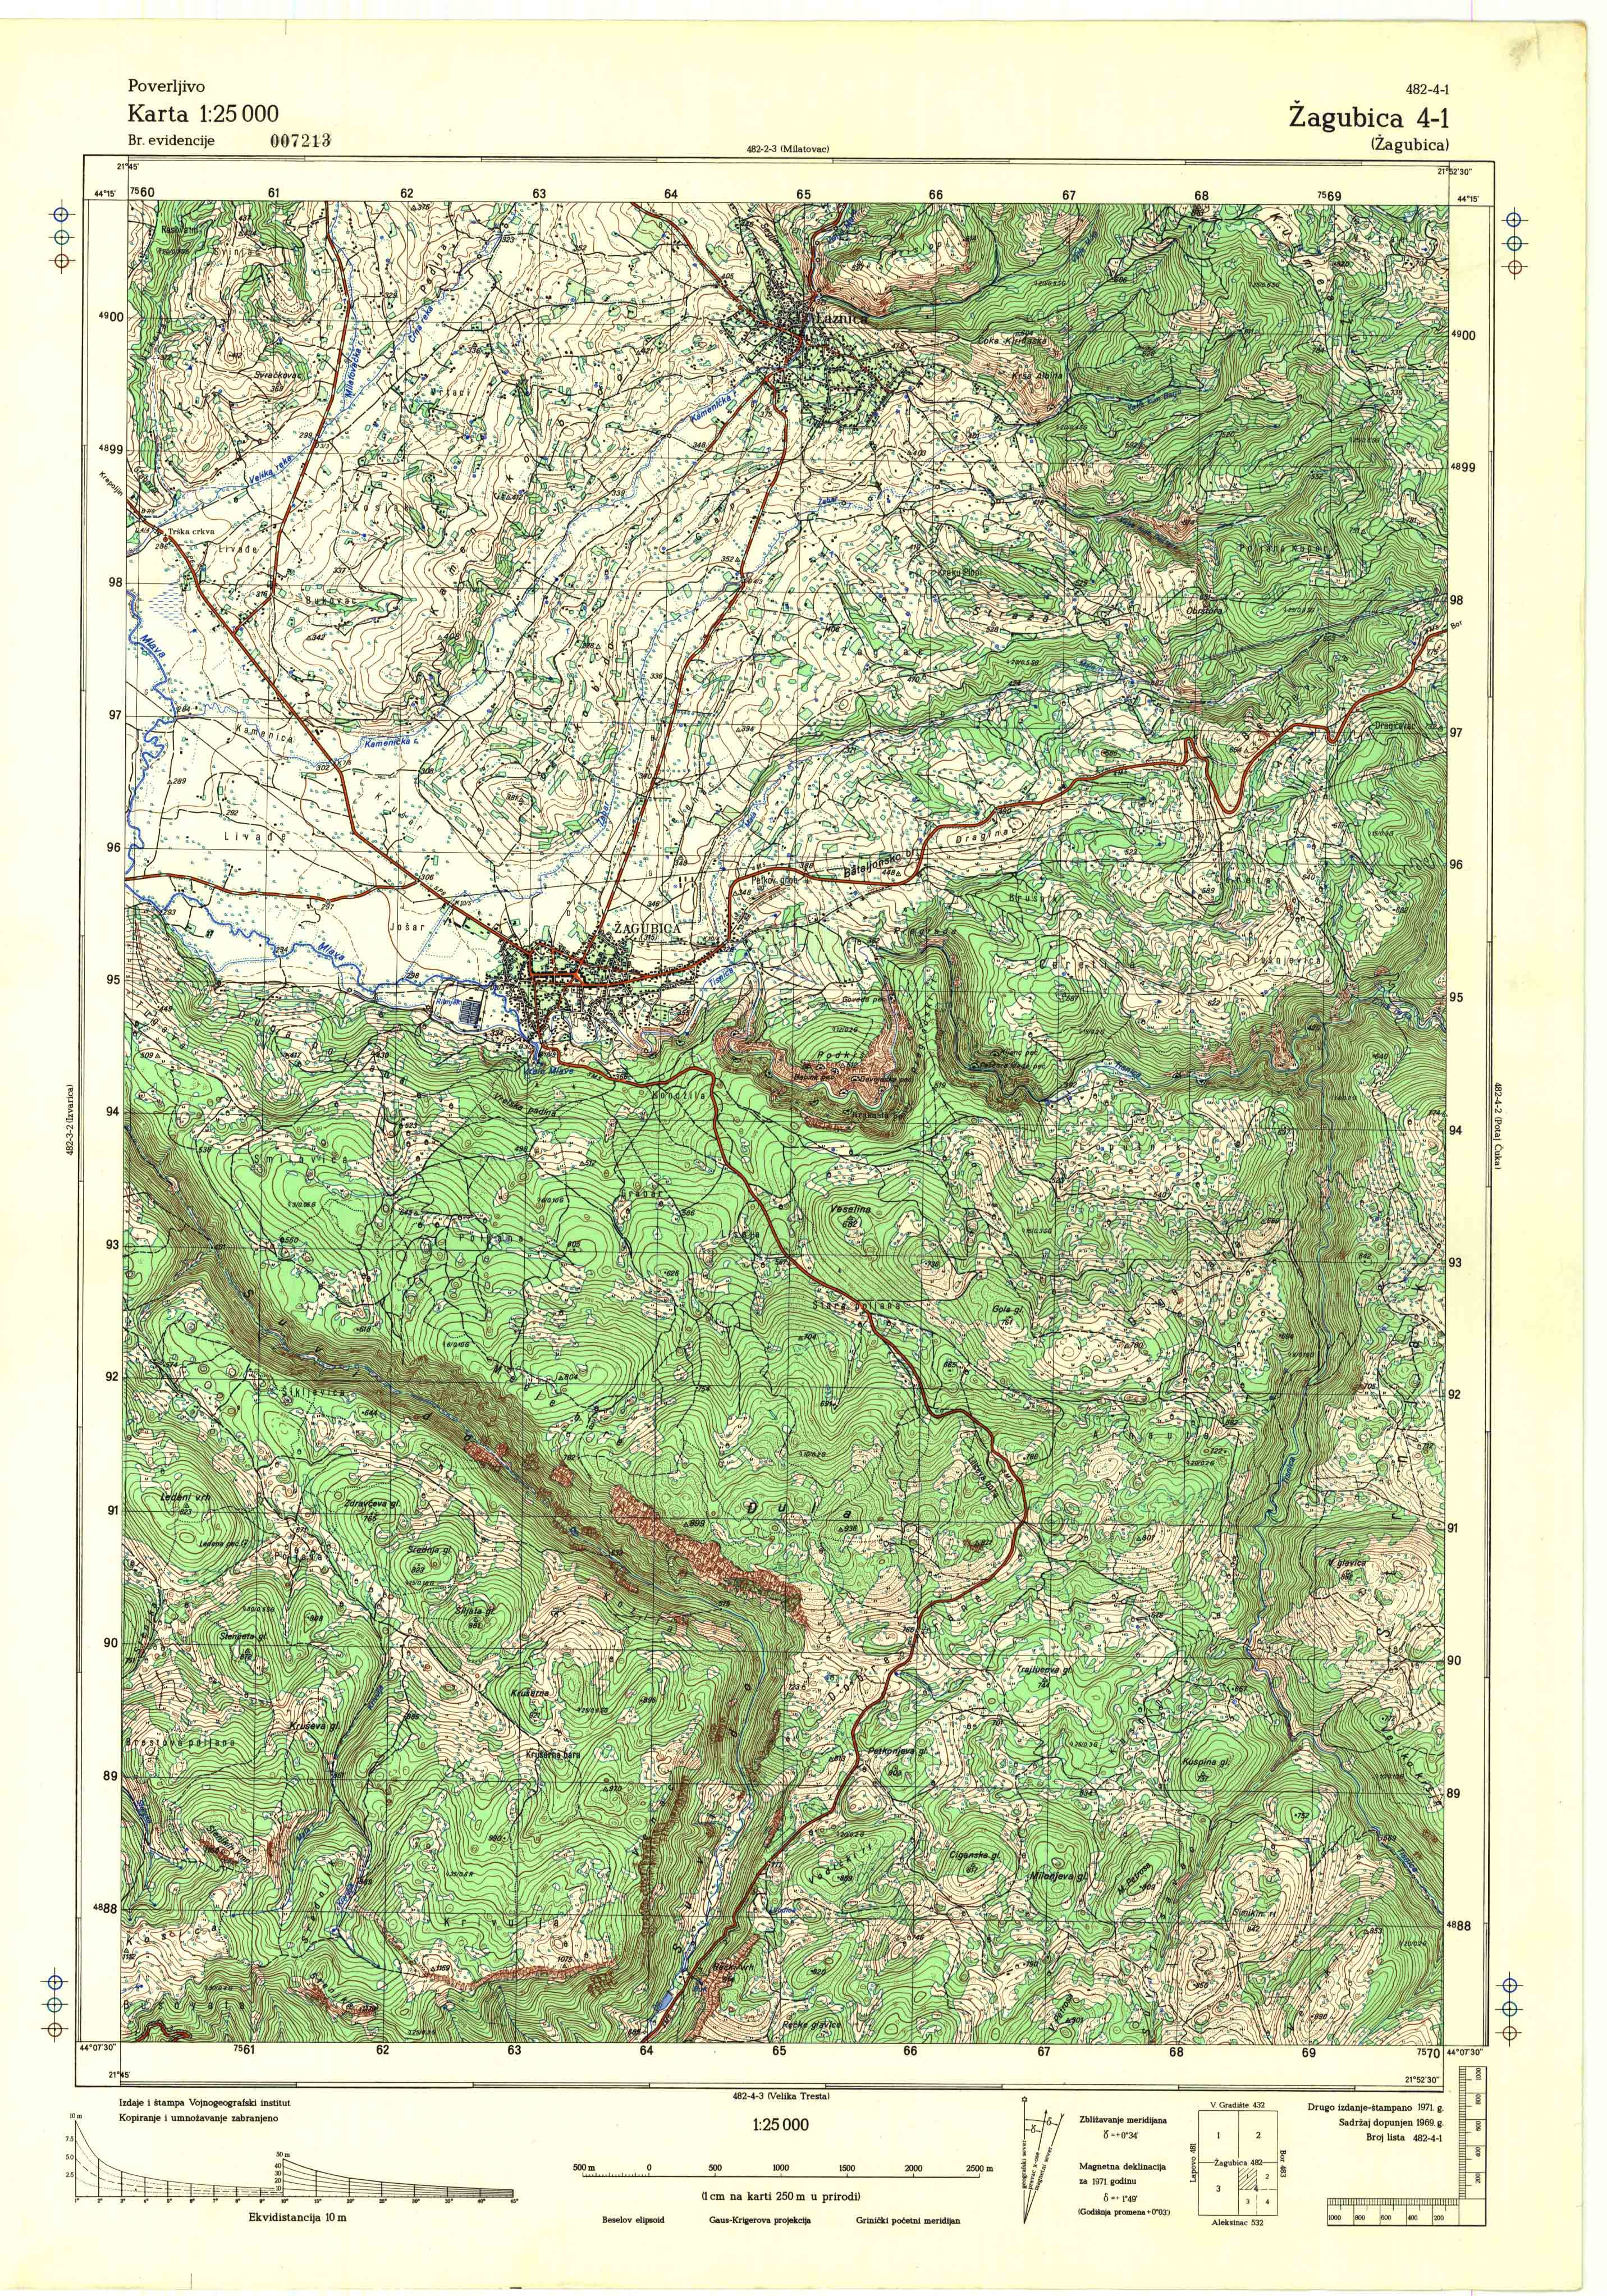  topografska karta srbije 25000 JNA  Zagubica